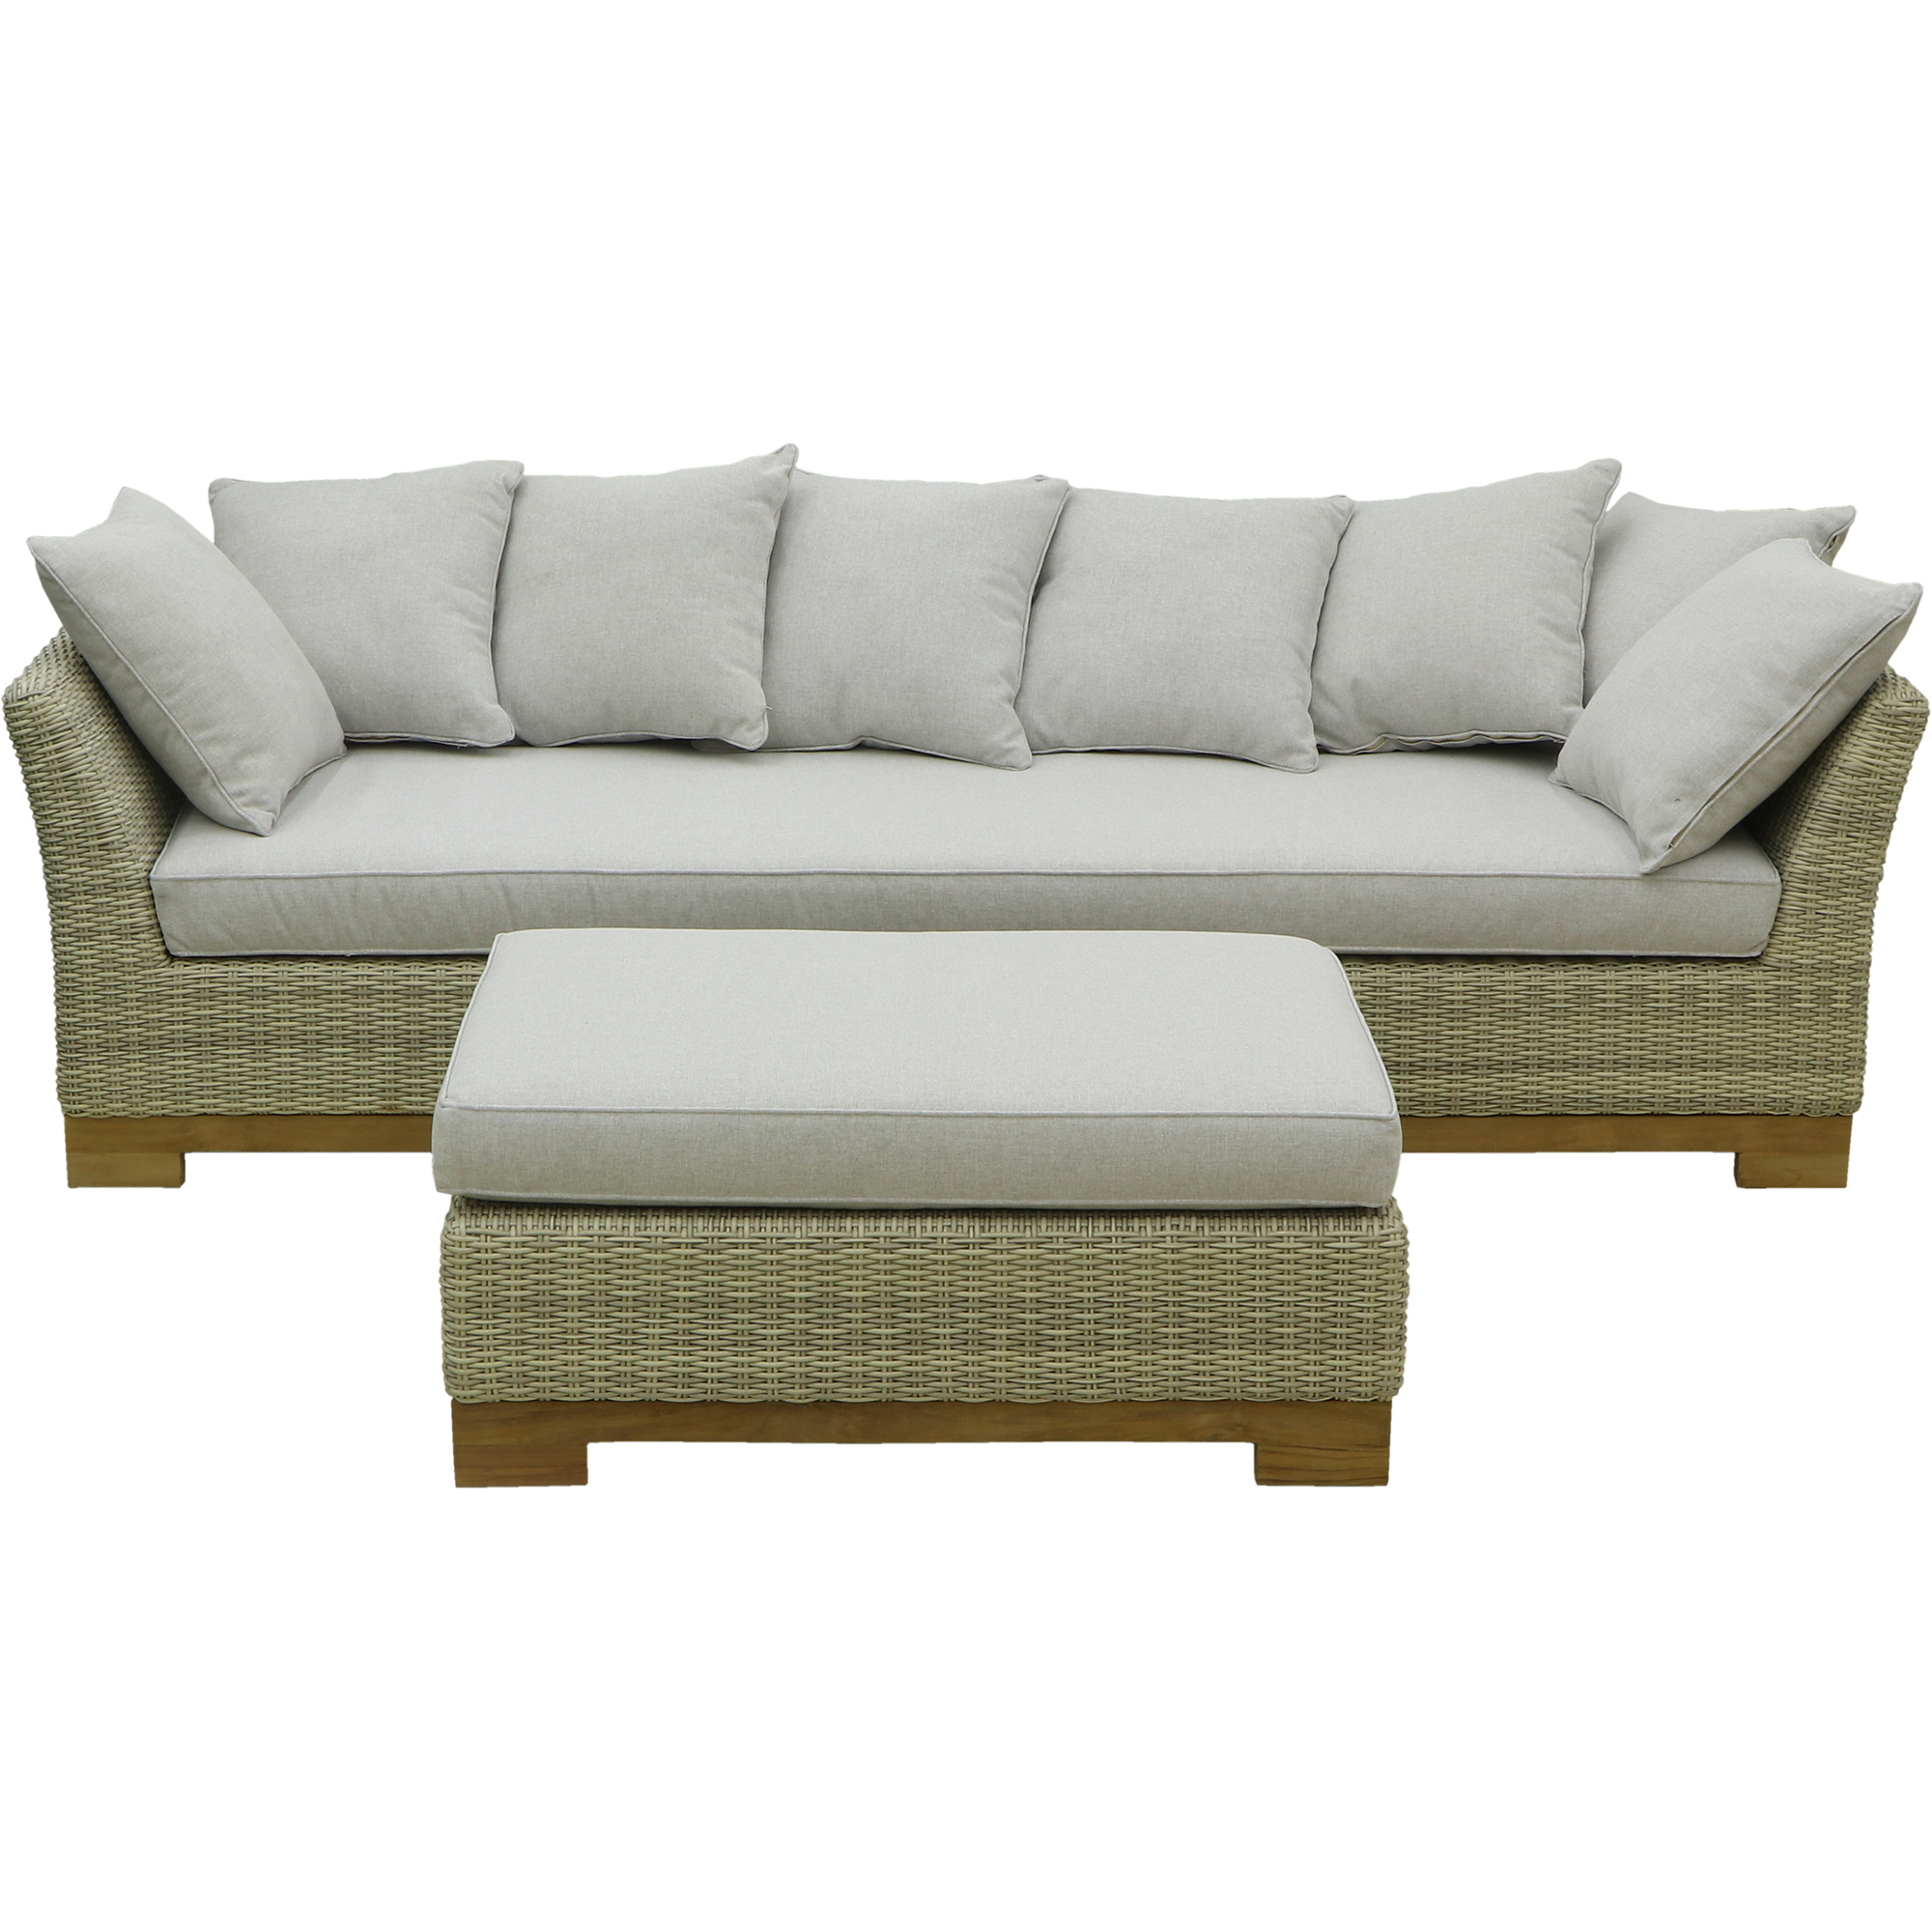 Комплект мебели с подушками Jepara 2 предмета, цвет светло-коричневый, размер 240х90х88 см - фото 1